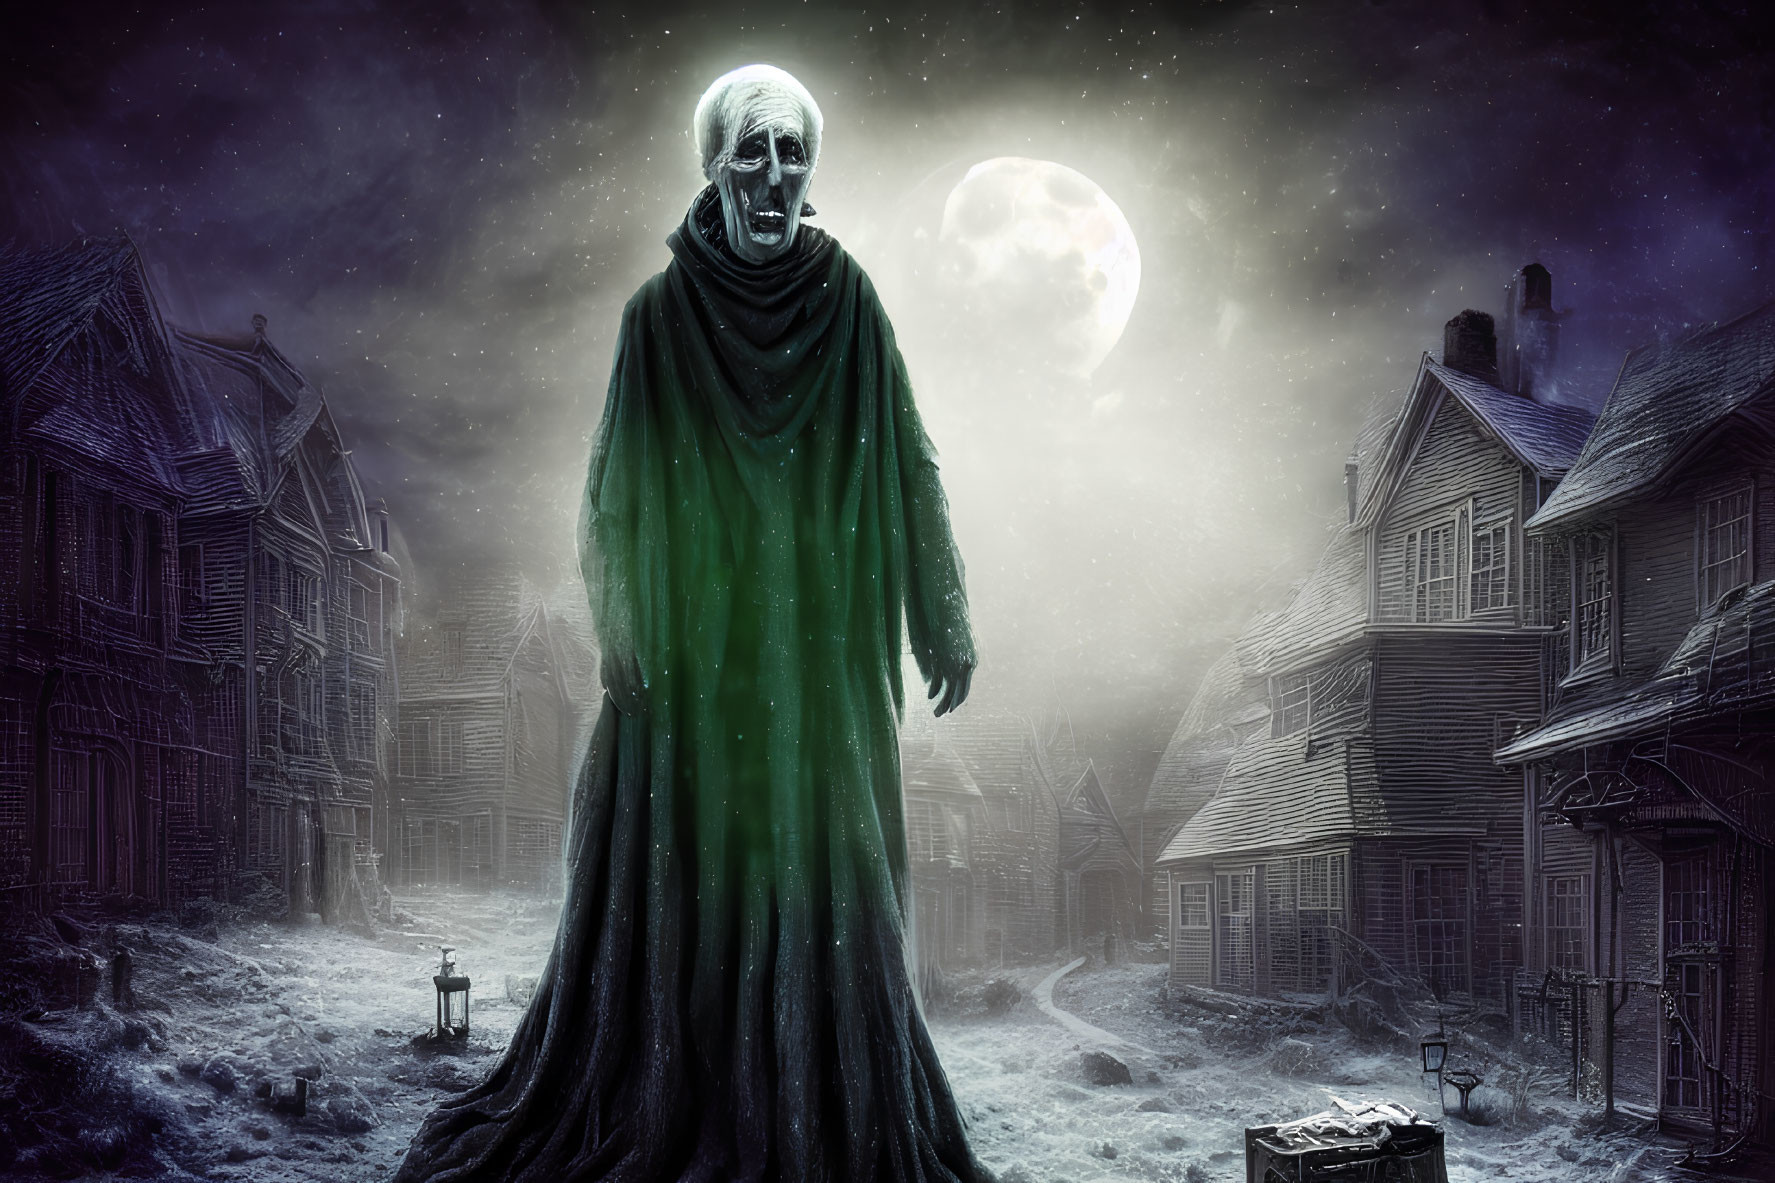 Ghostly figure in dark cloak on snowy Victorian street at night